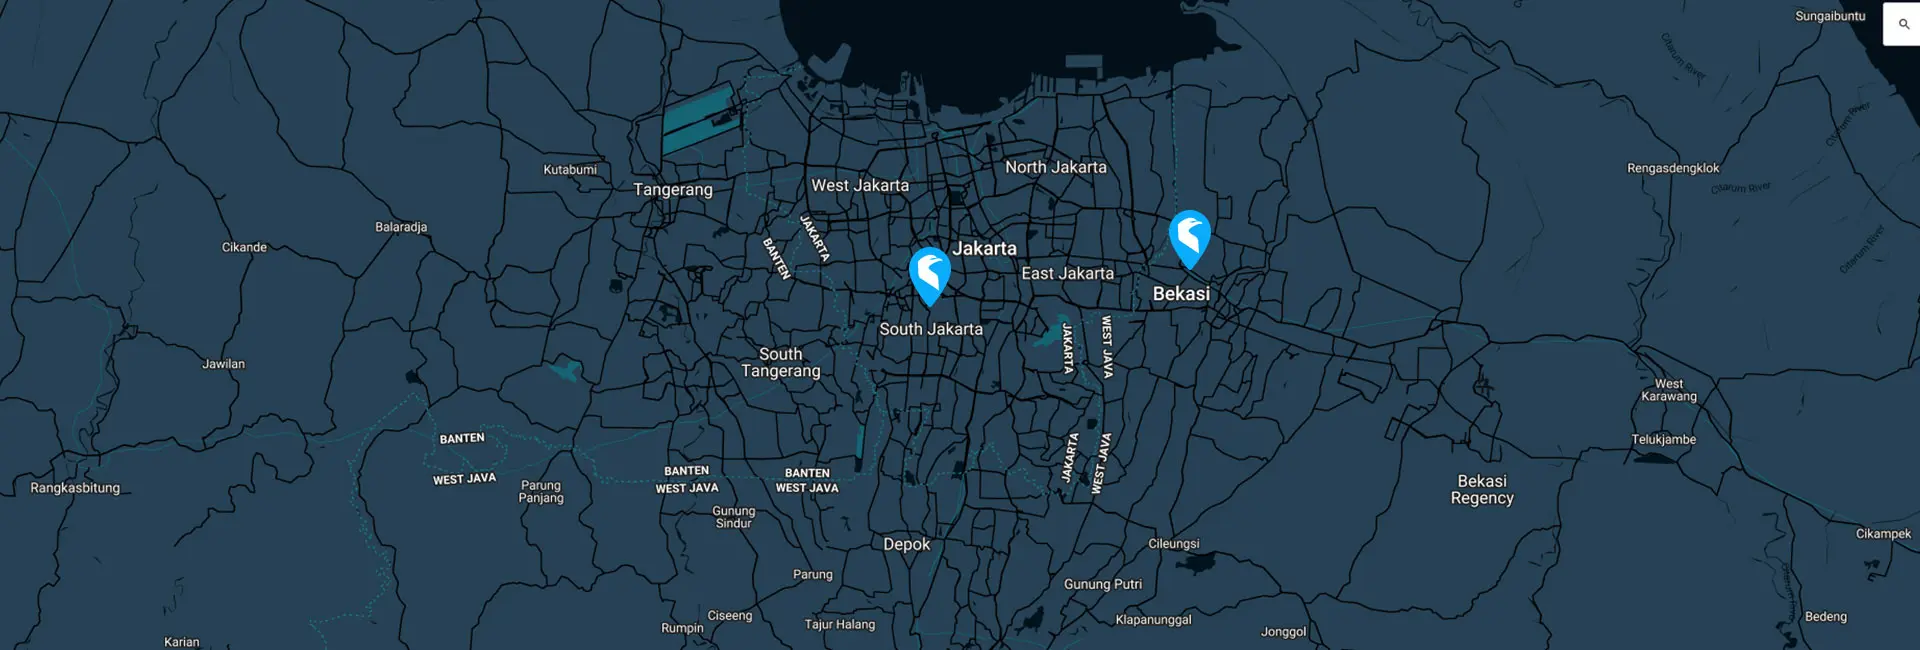 Lokasi & Fasilitas Data Center Indonesia